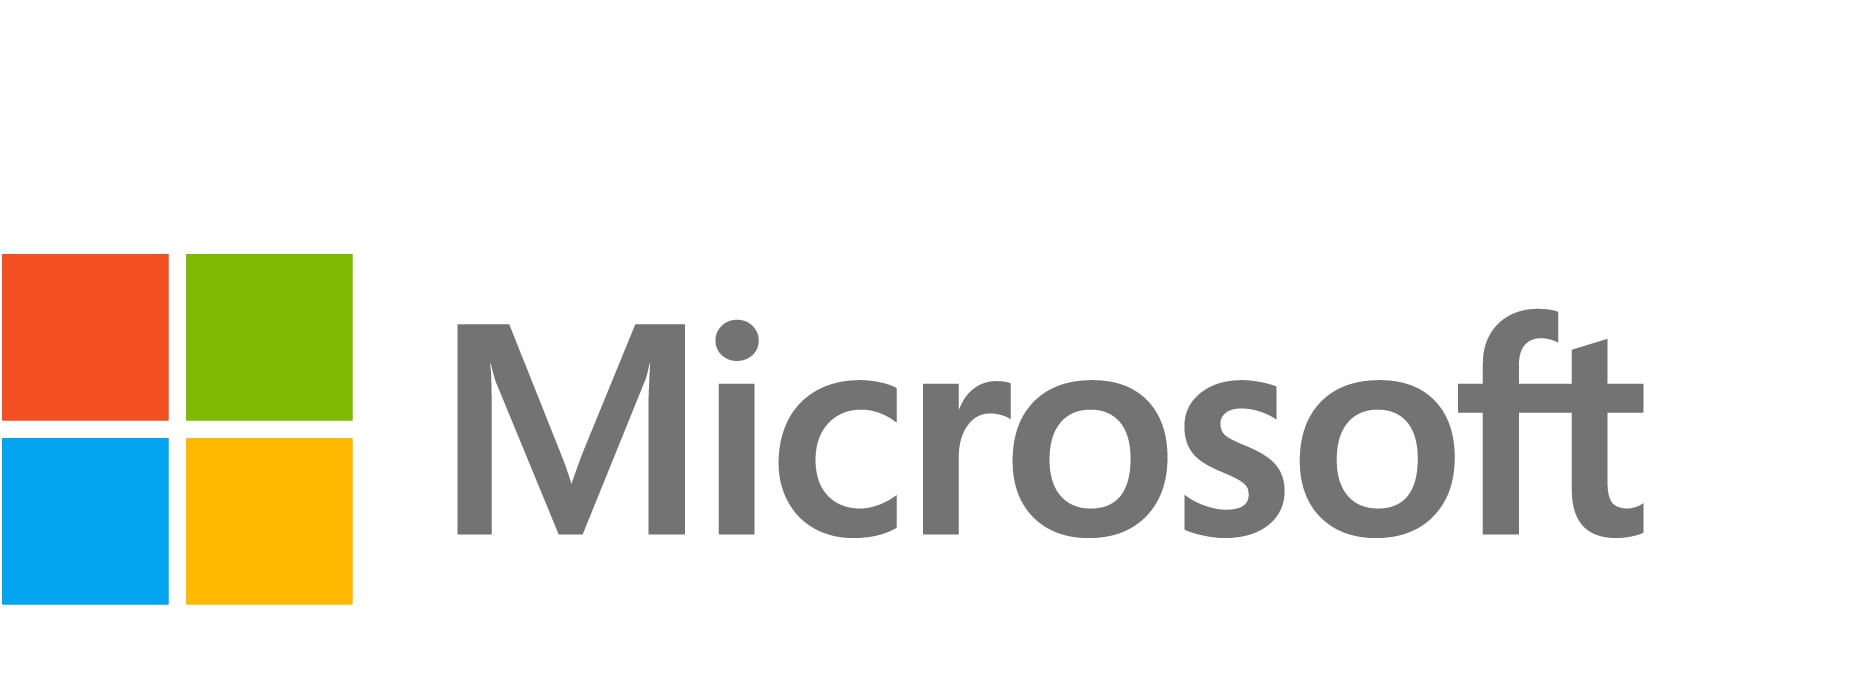 Microsoft BizTalk Server Enterprise Edition - step-up license & software assurance - 2 cores